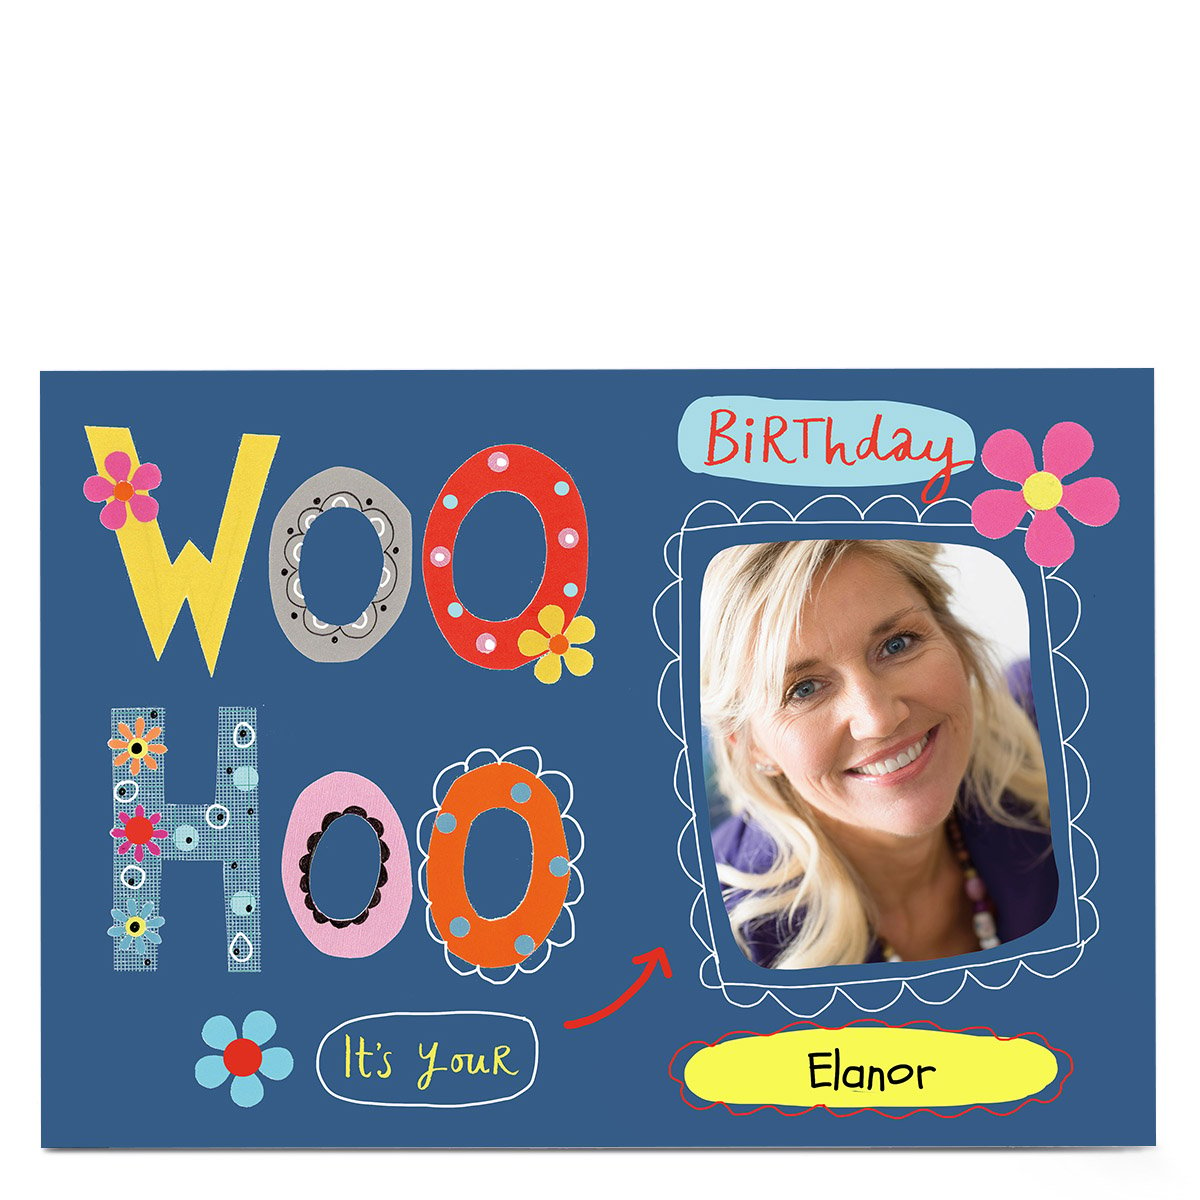 Photo Lindsay Loves To Draw Birthday Card - Woo Hoo